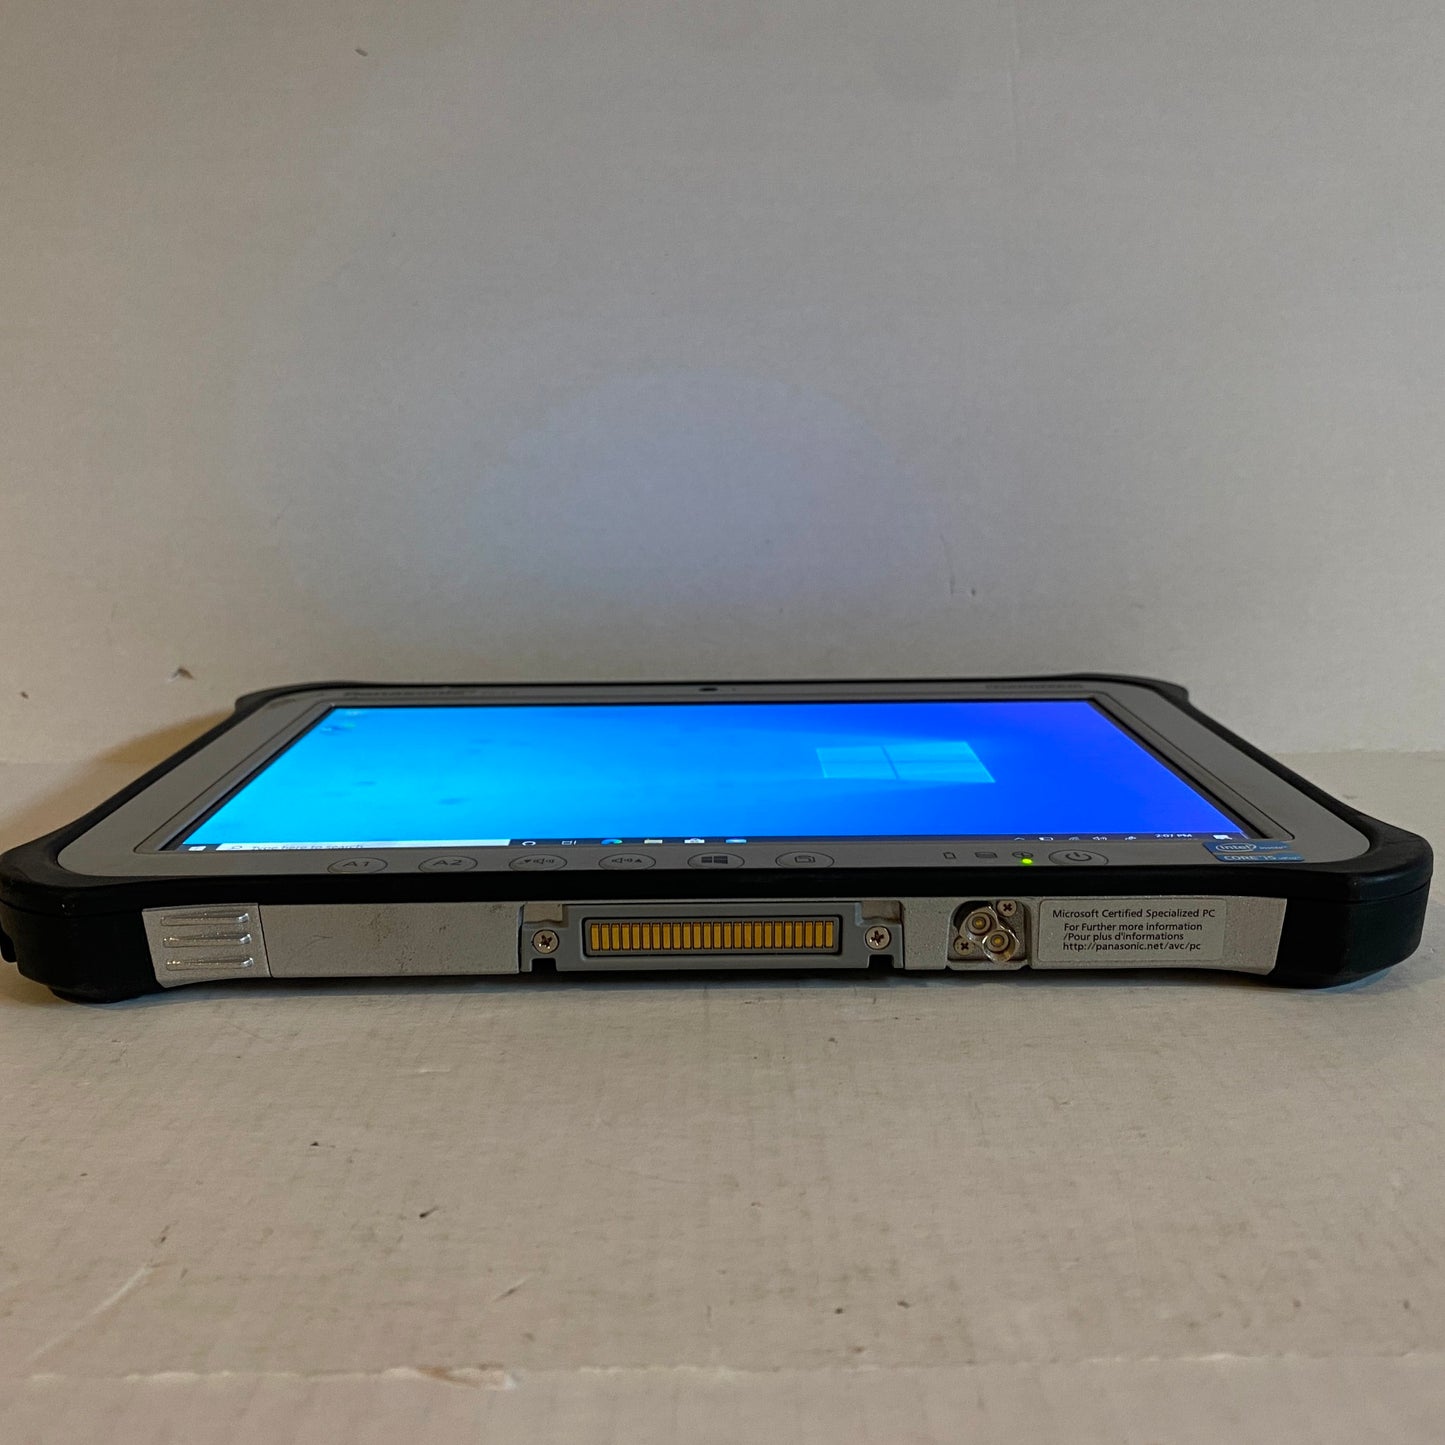 Panasonic ToughPad Tablet Computer i5-3437U @1.90Ghz 120 GB HDD 4GB RAM - FZ-G1